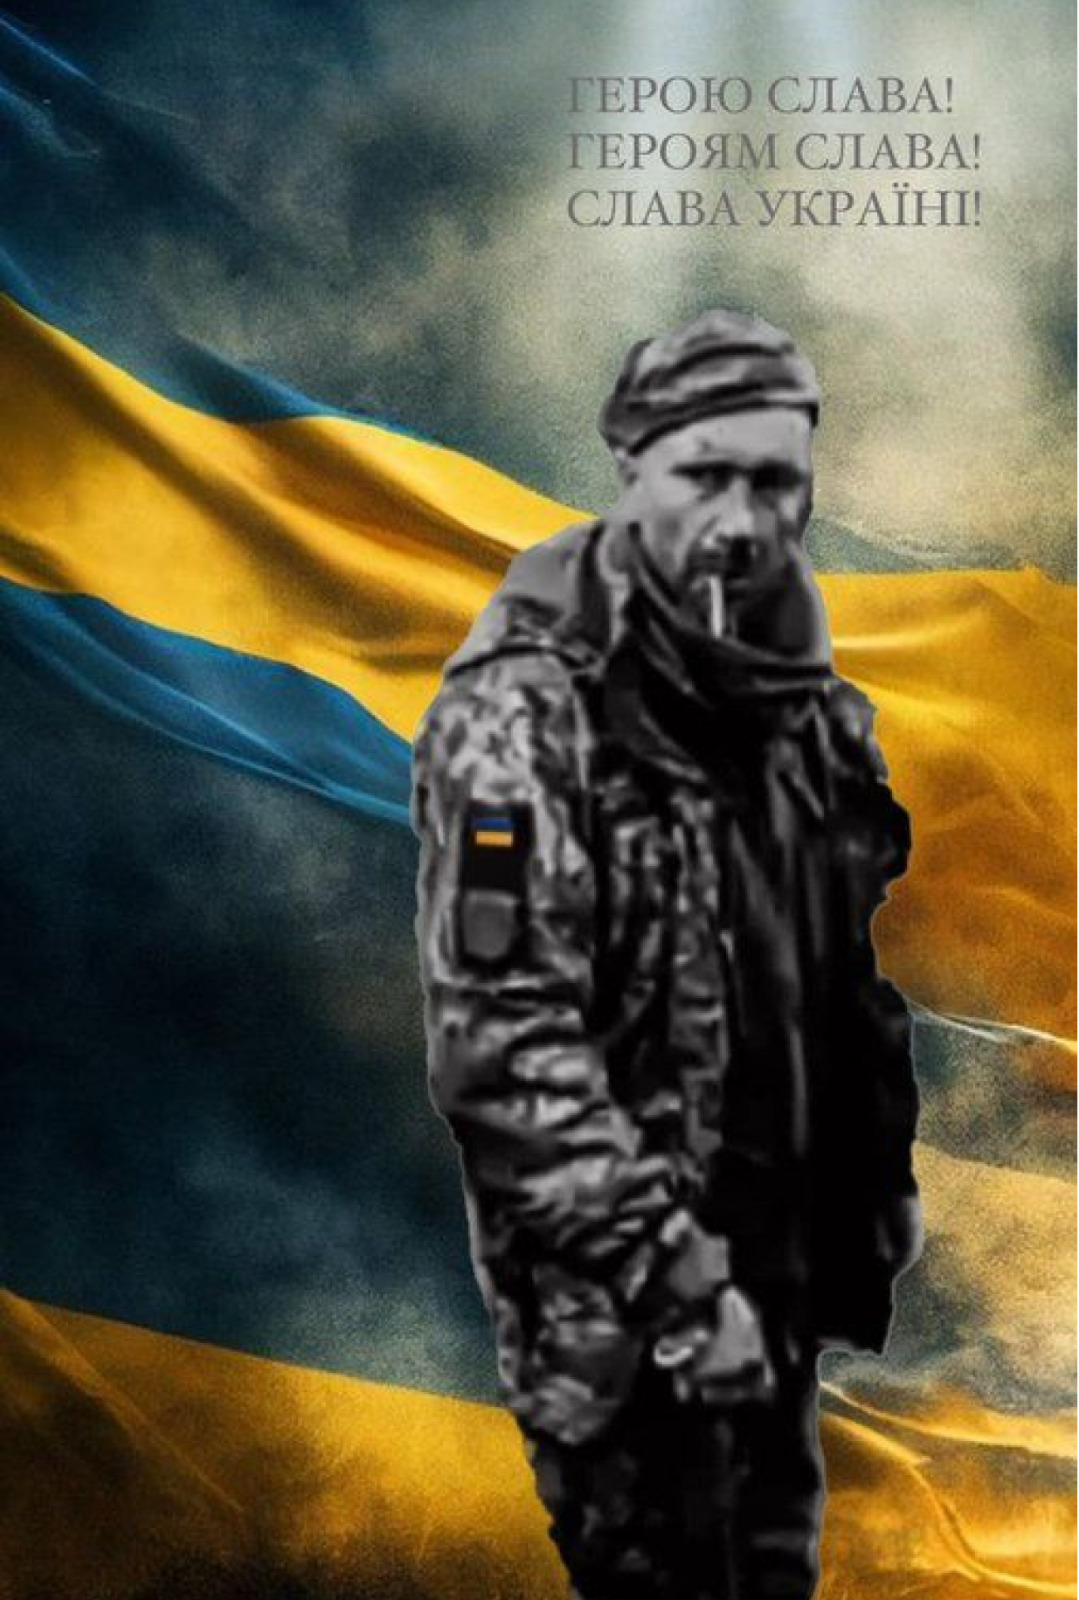 War in UKRAINE Postcard GLORY TO THE HERO